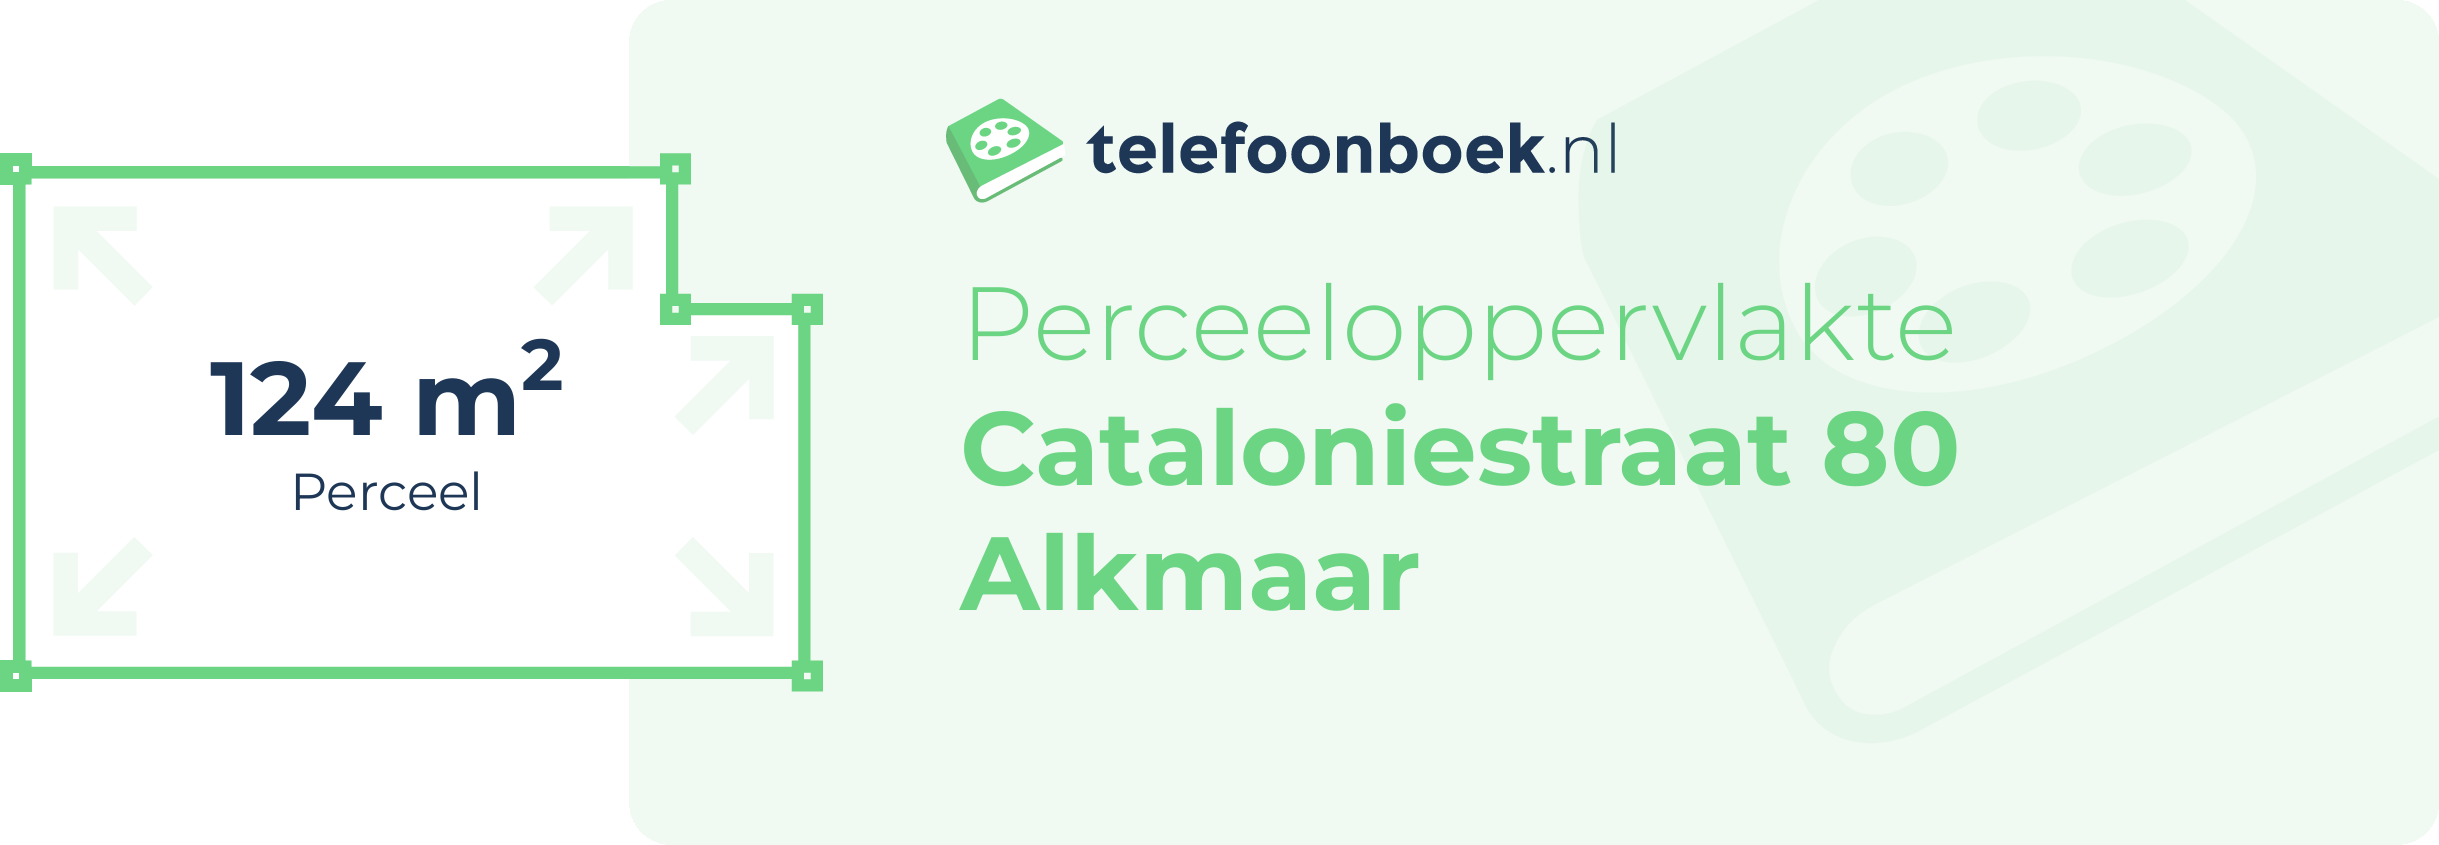 Perceeloppervlakte Cataloniestraat 80 Alkmaar